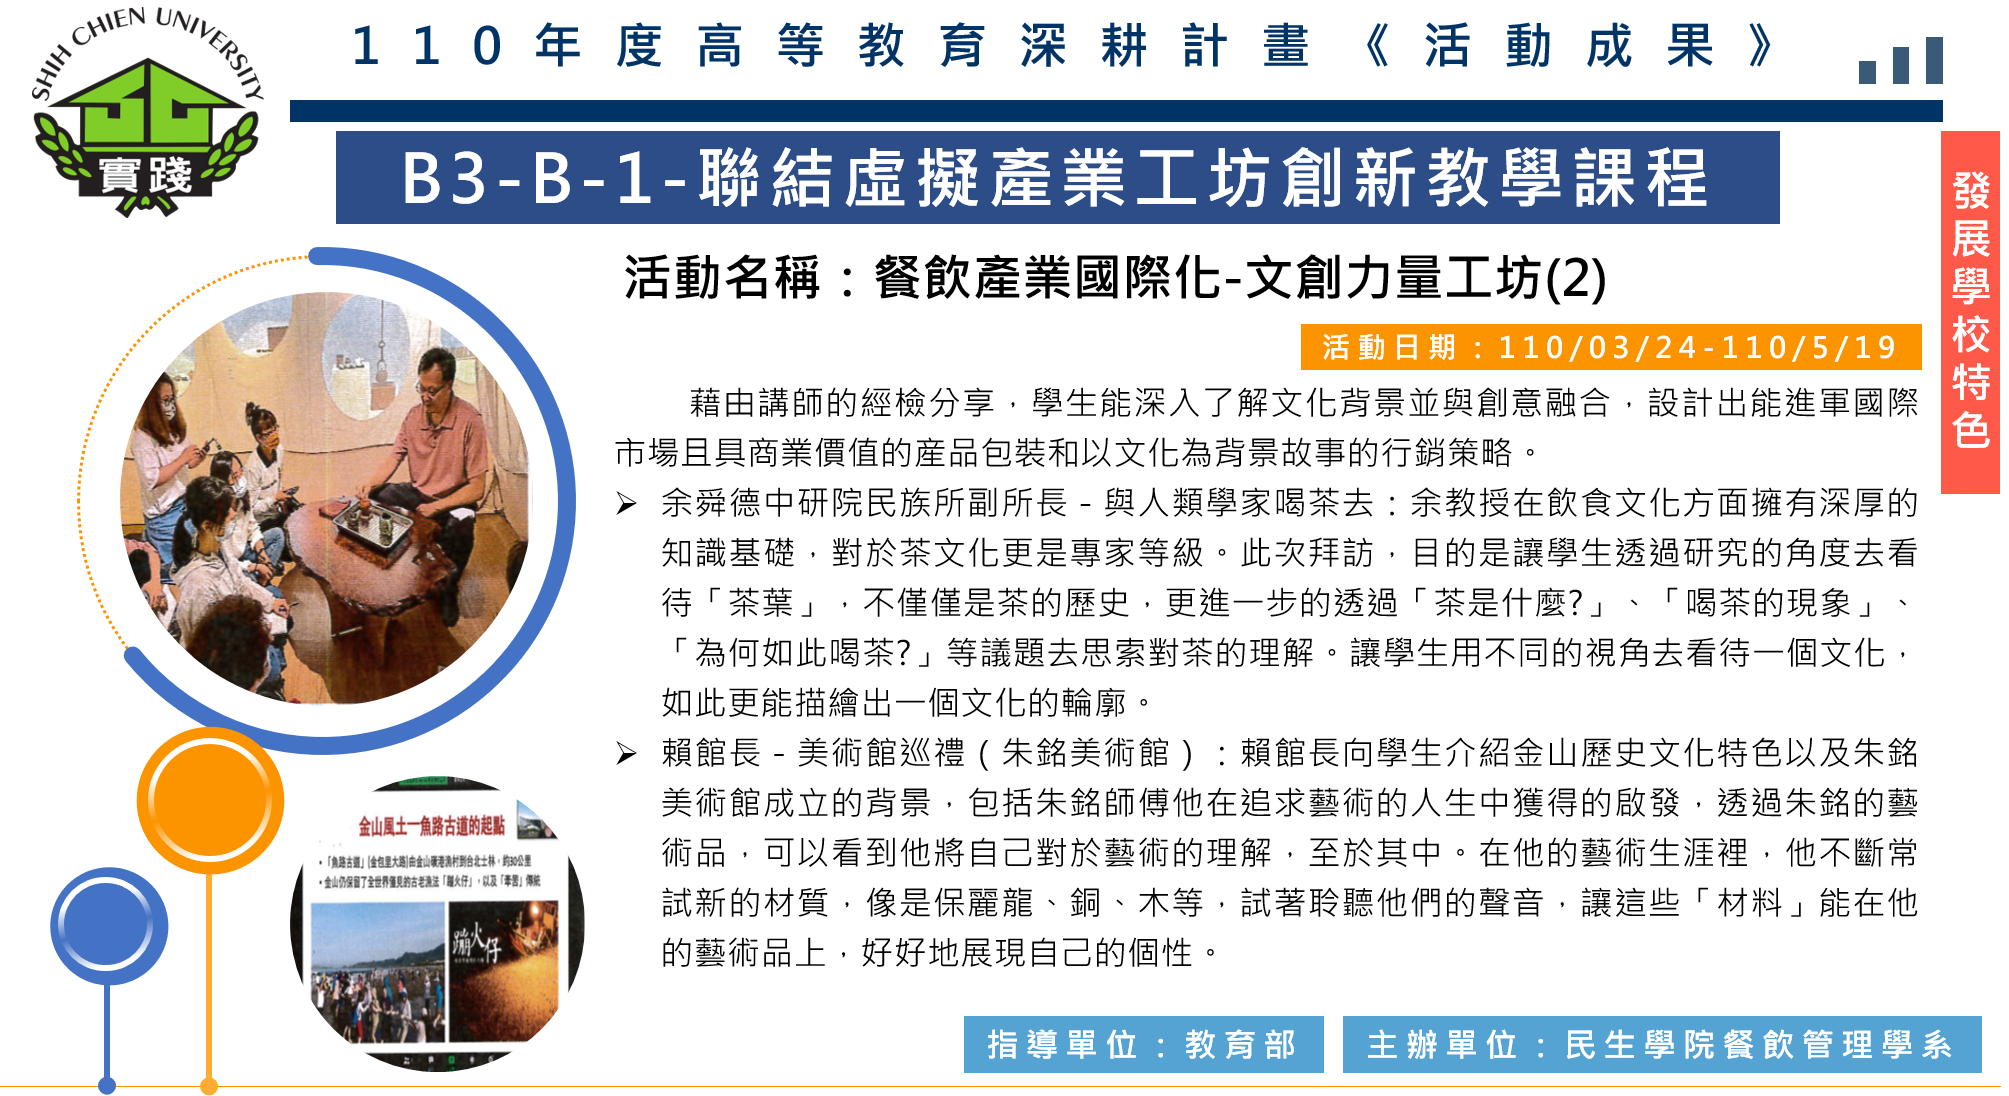 【B3-B-1】聯結虛擬產業工坊創新教學課程(5)